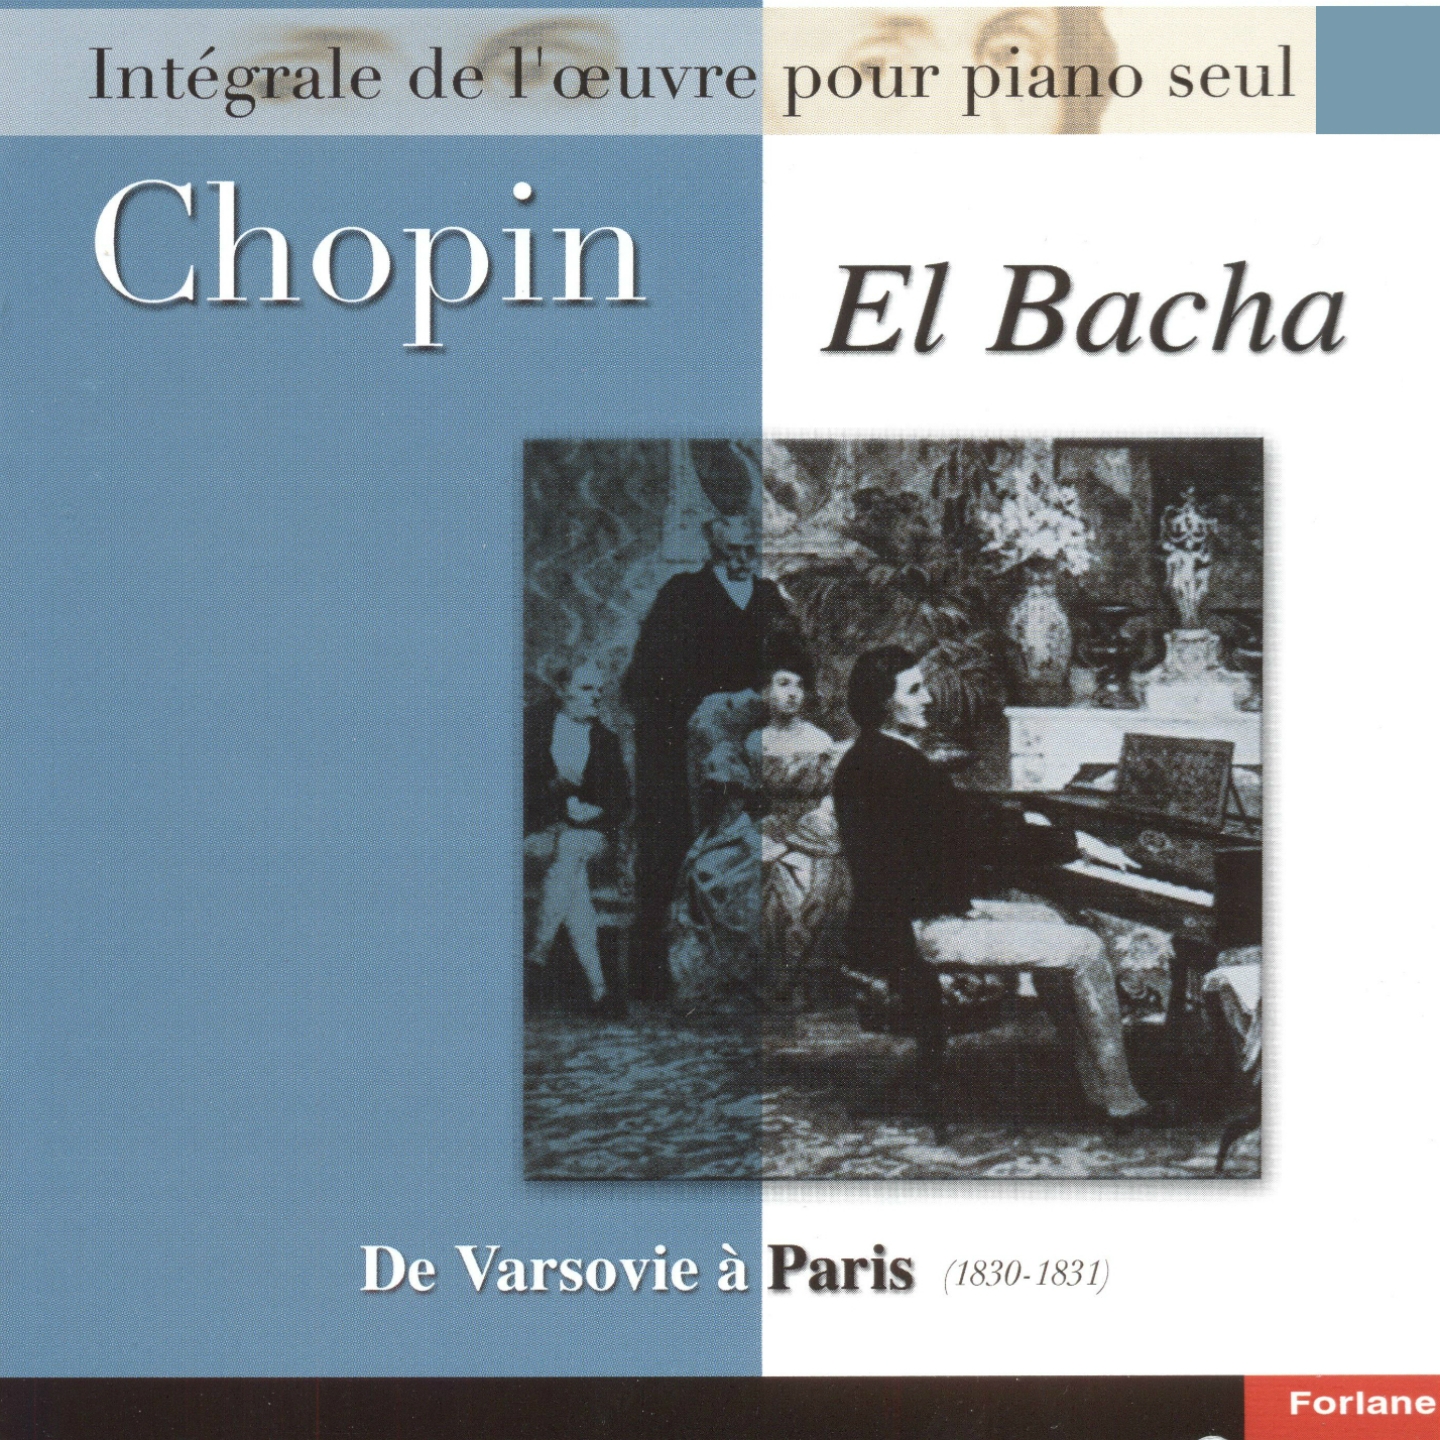 Chopin : Inte grale de l' oeuvre pour piano seul, vol. 6 : De Varsovie a Paris 18301831